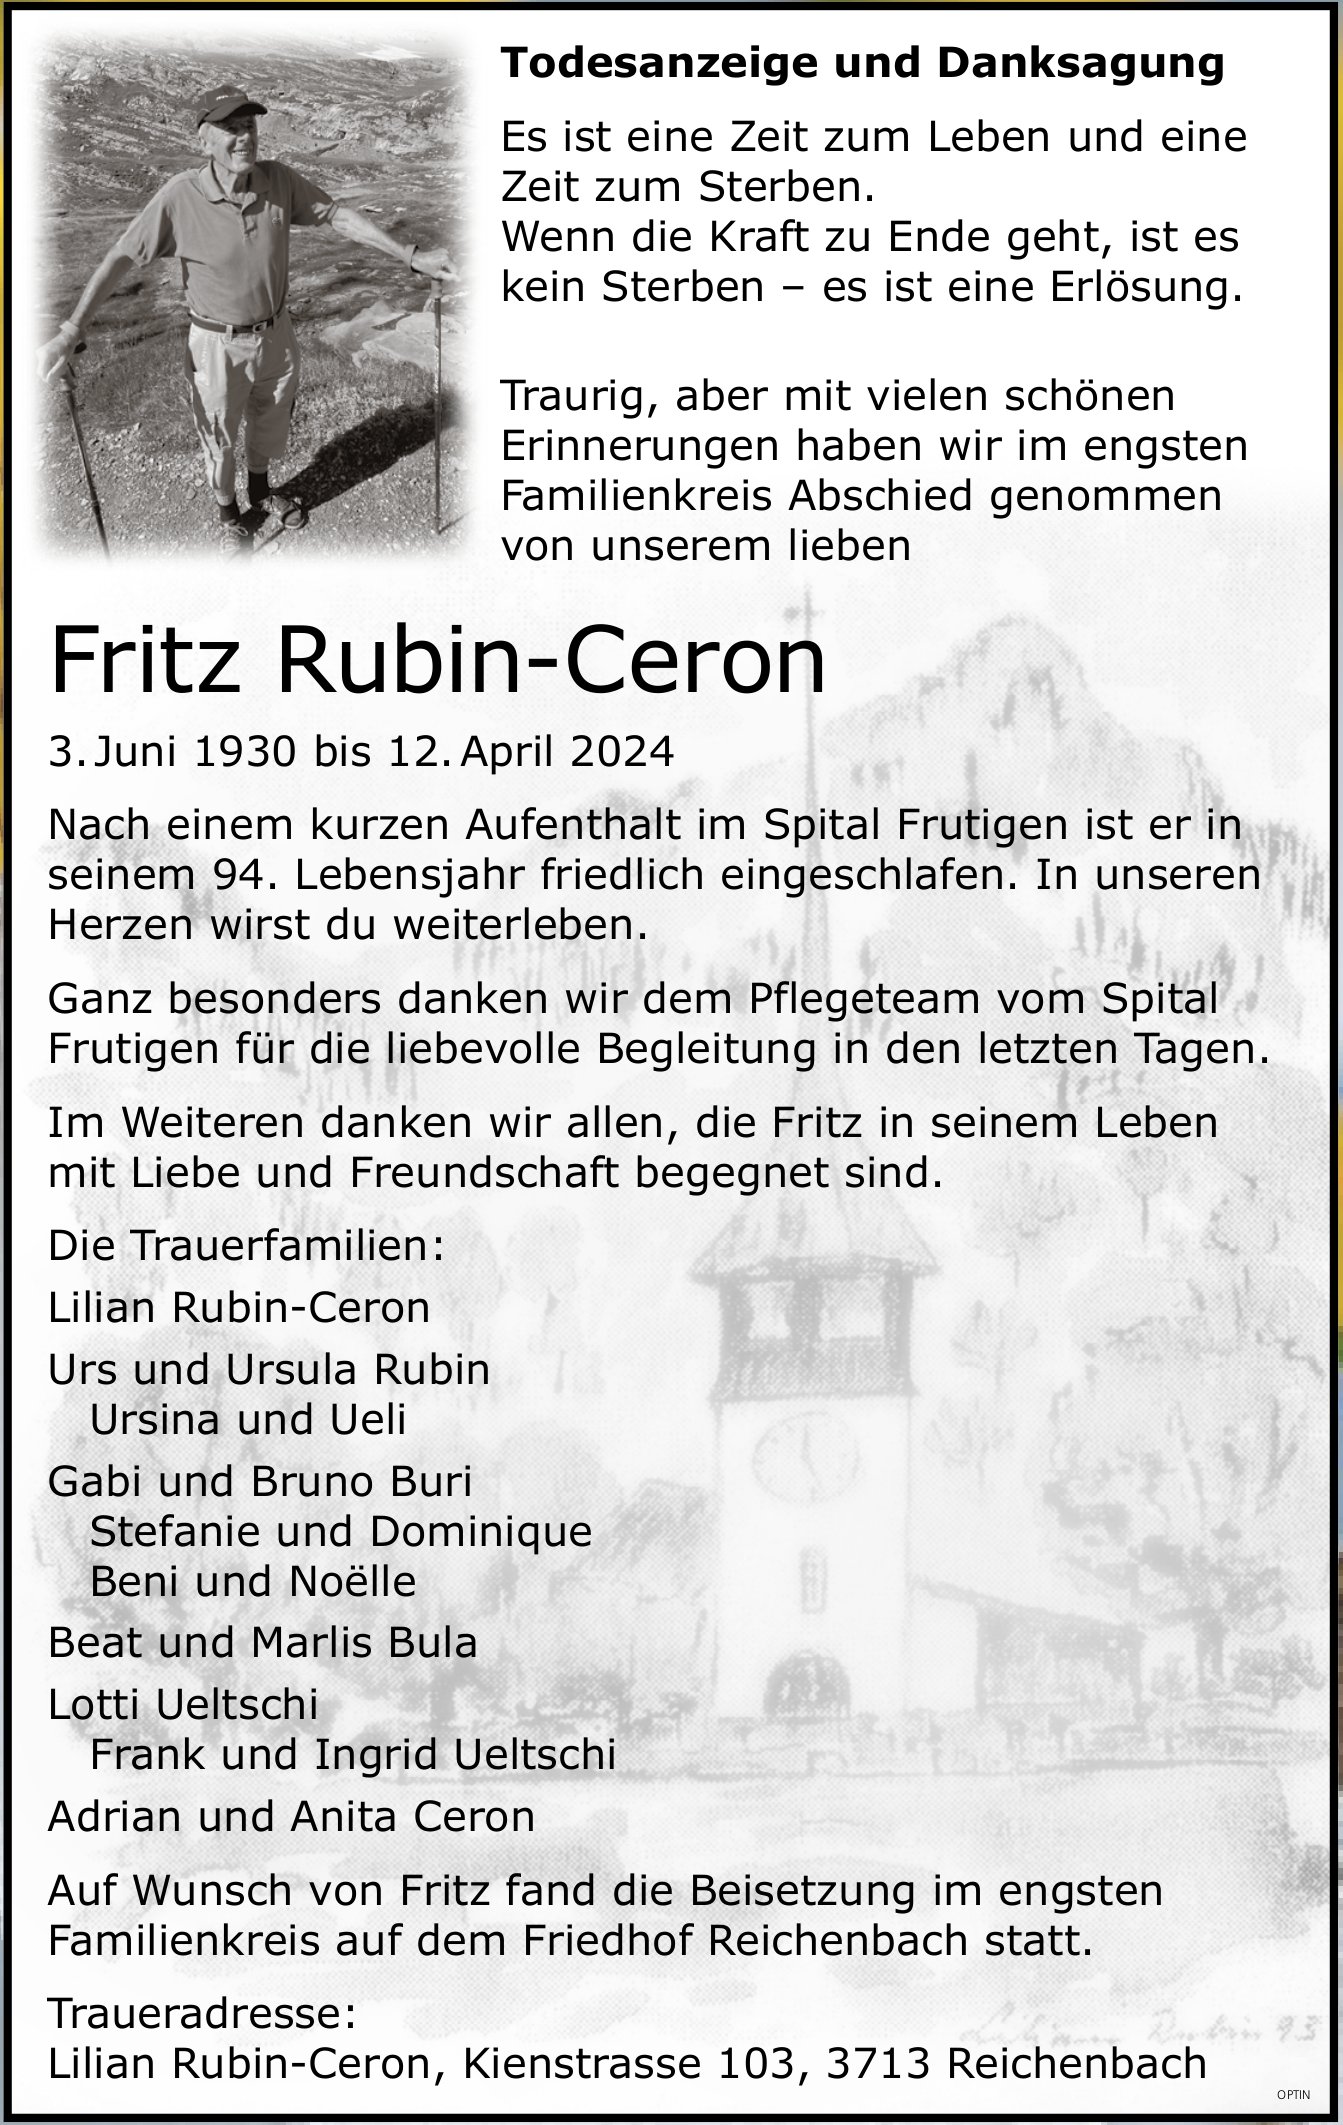 Fritz Rubin-Ceron, April 2024 / TA